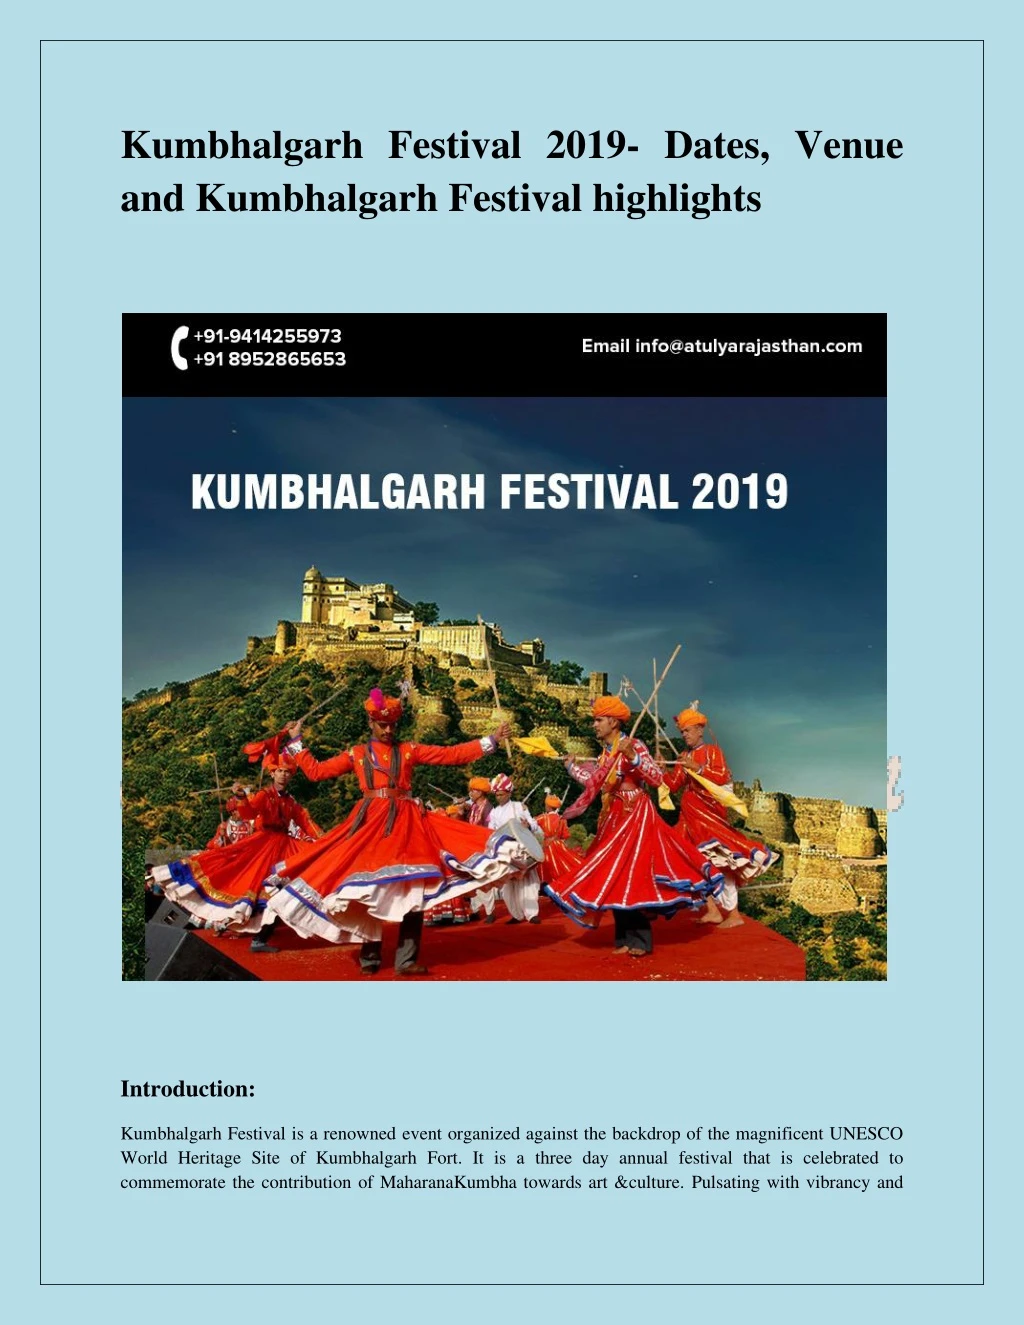 kumbhalgarh festival 2019 dates venue